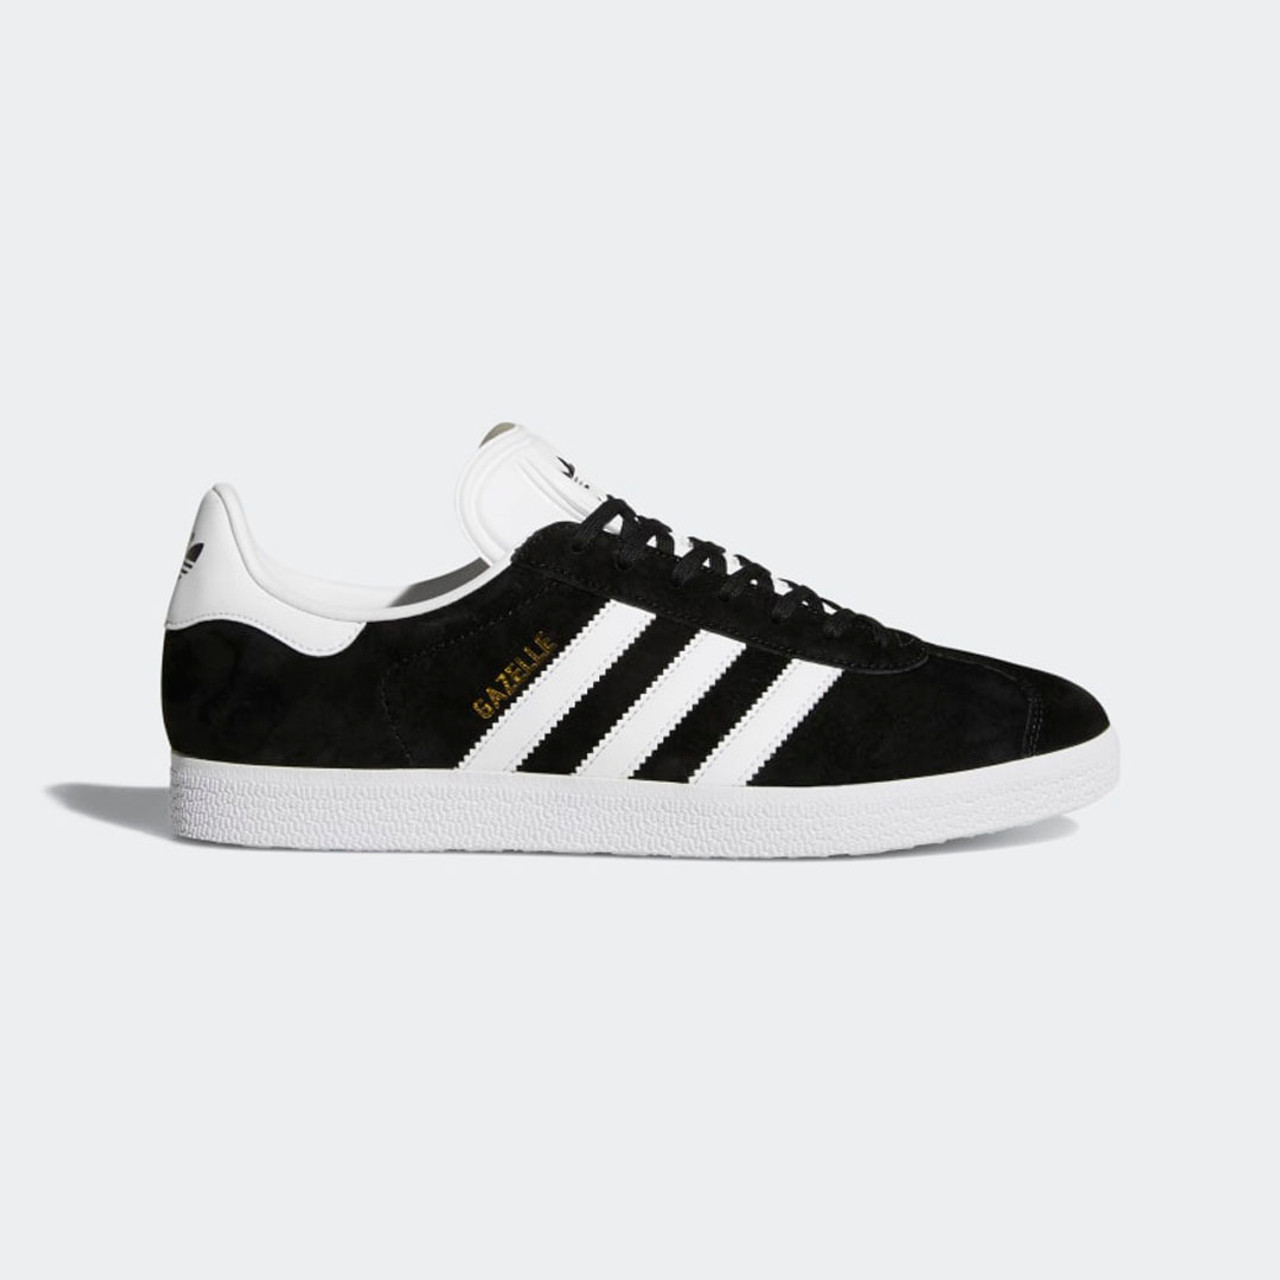 adidas adidas Men's Gazelle Shoes - Black/White $ 79.99 | TYLER'S